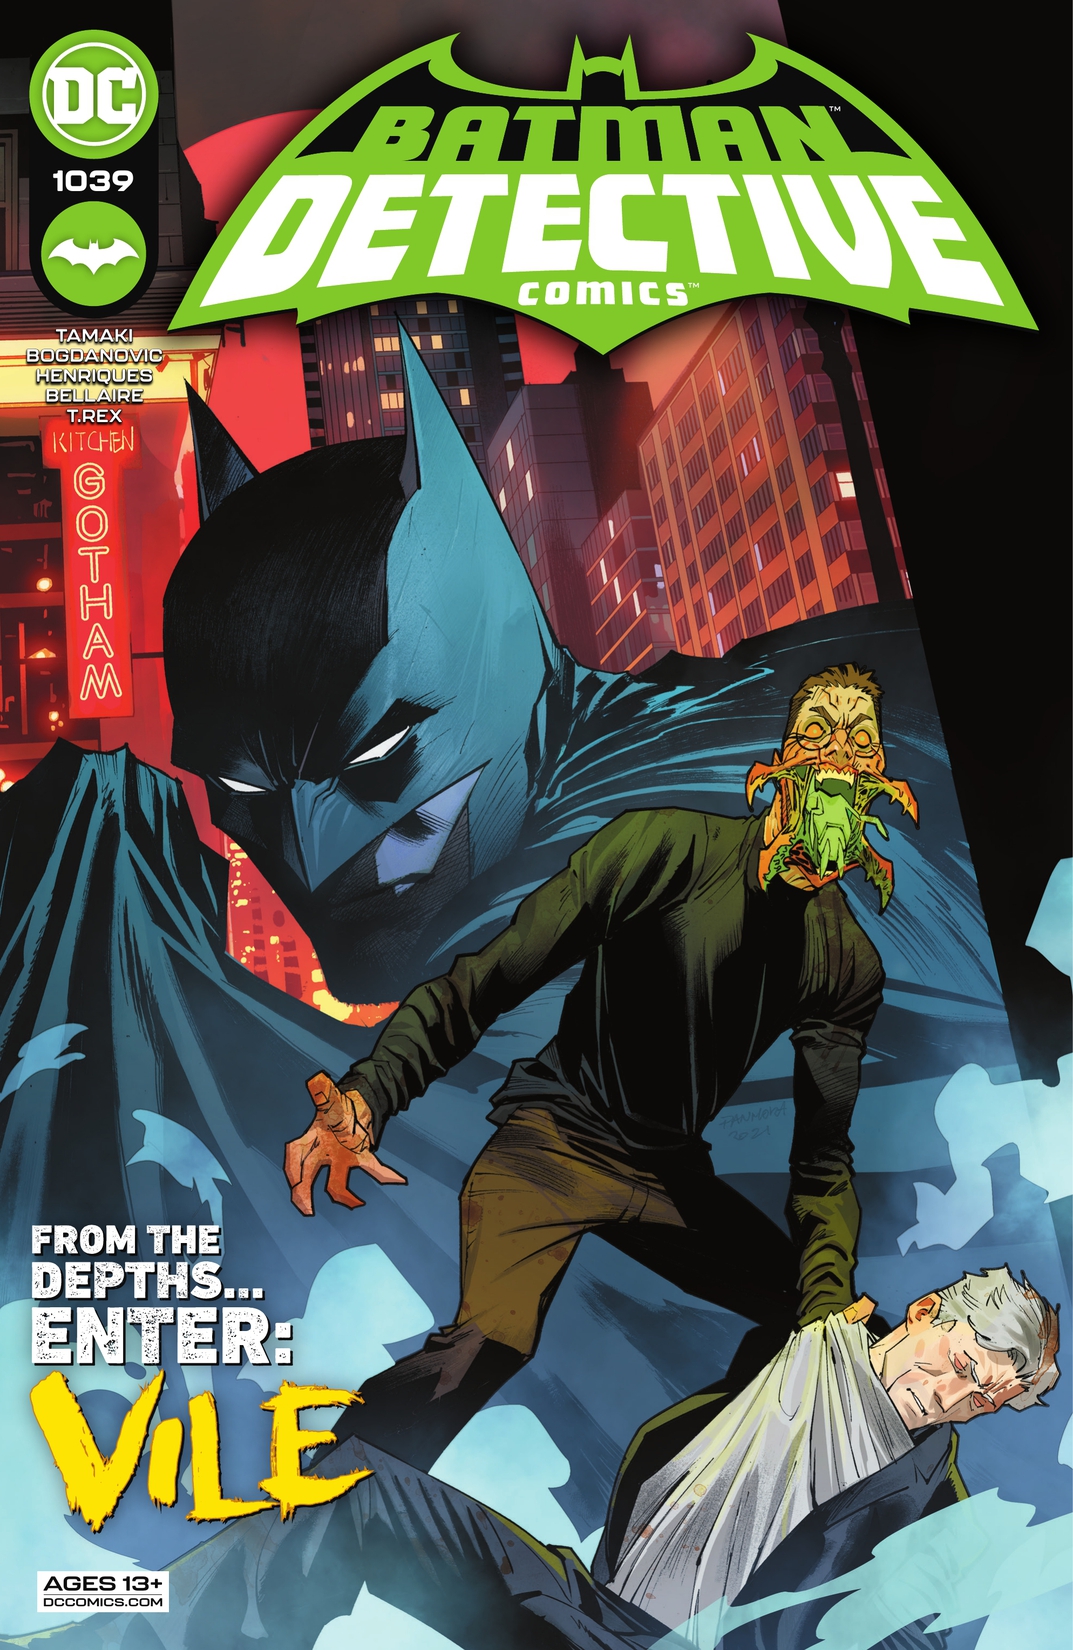 Detective Comics (2016-) #1039 preview images